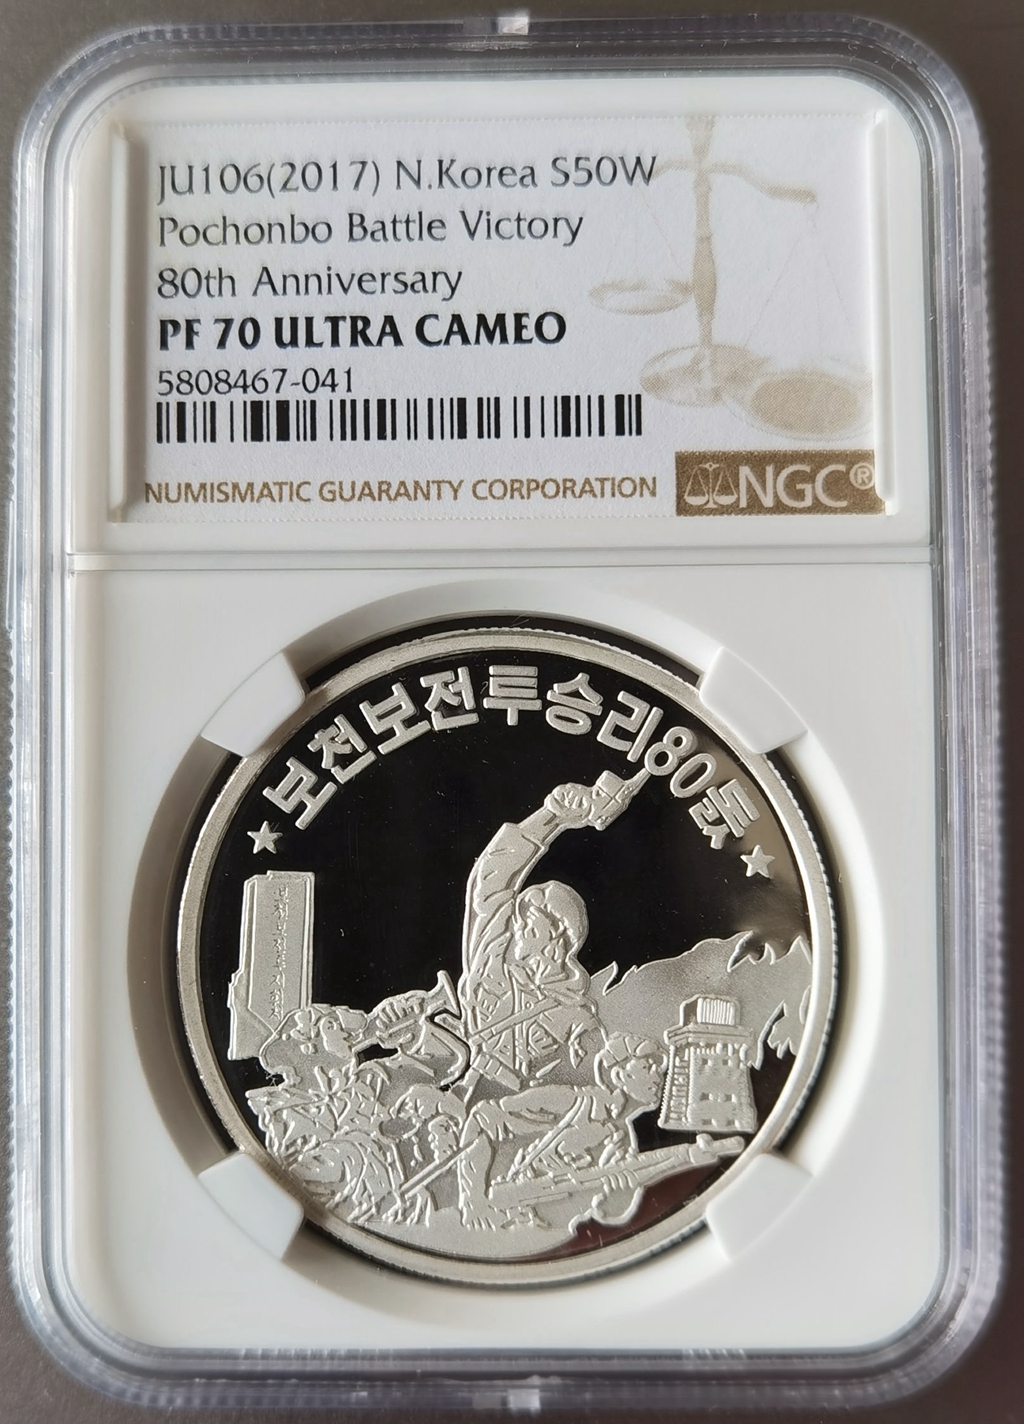 L3561, NGC PF69, Korea "Battle of Pochonbo, 80th Anni." Silver Coin 2017